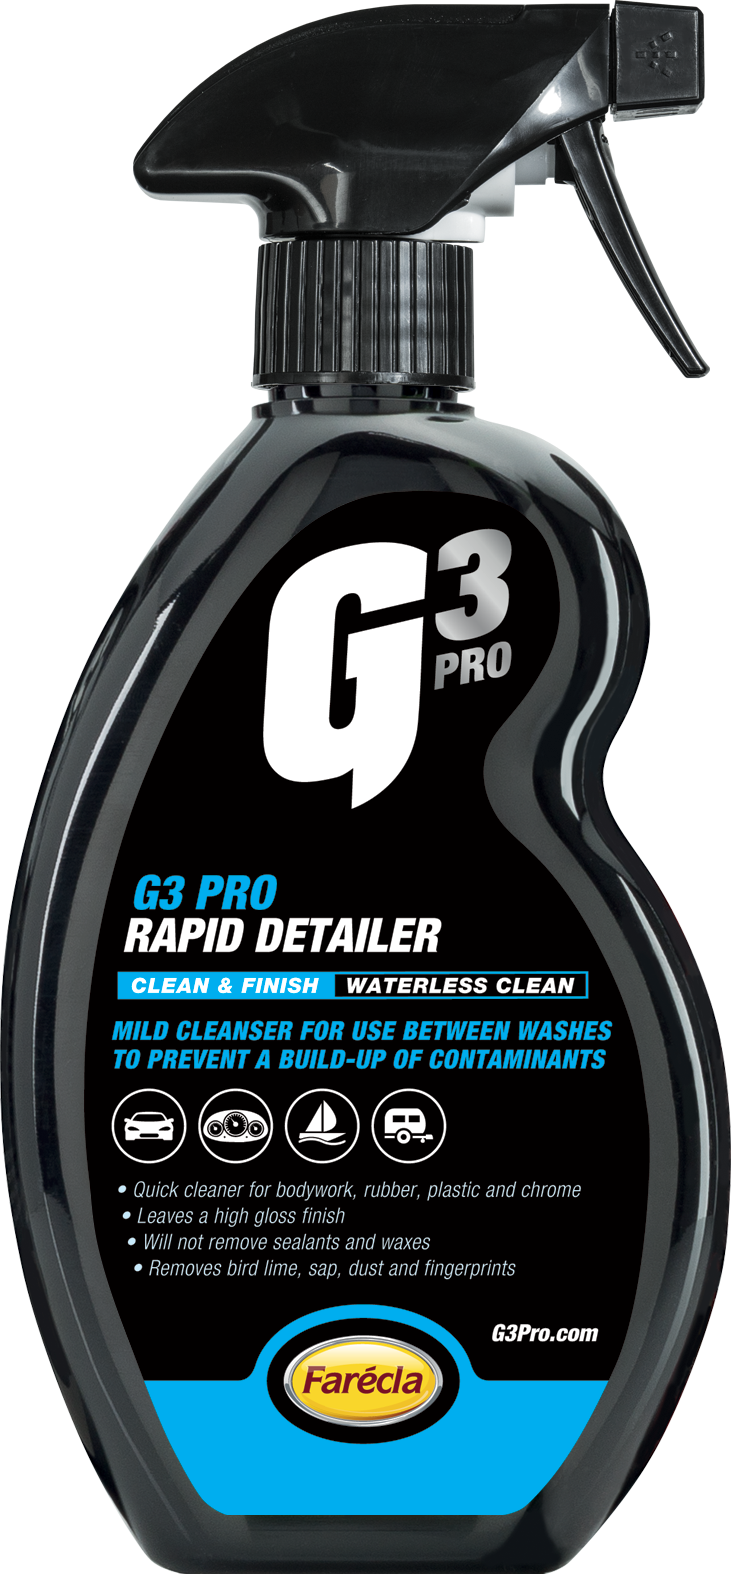 G3 Pro Rapid Detailer (waterless cleaner)